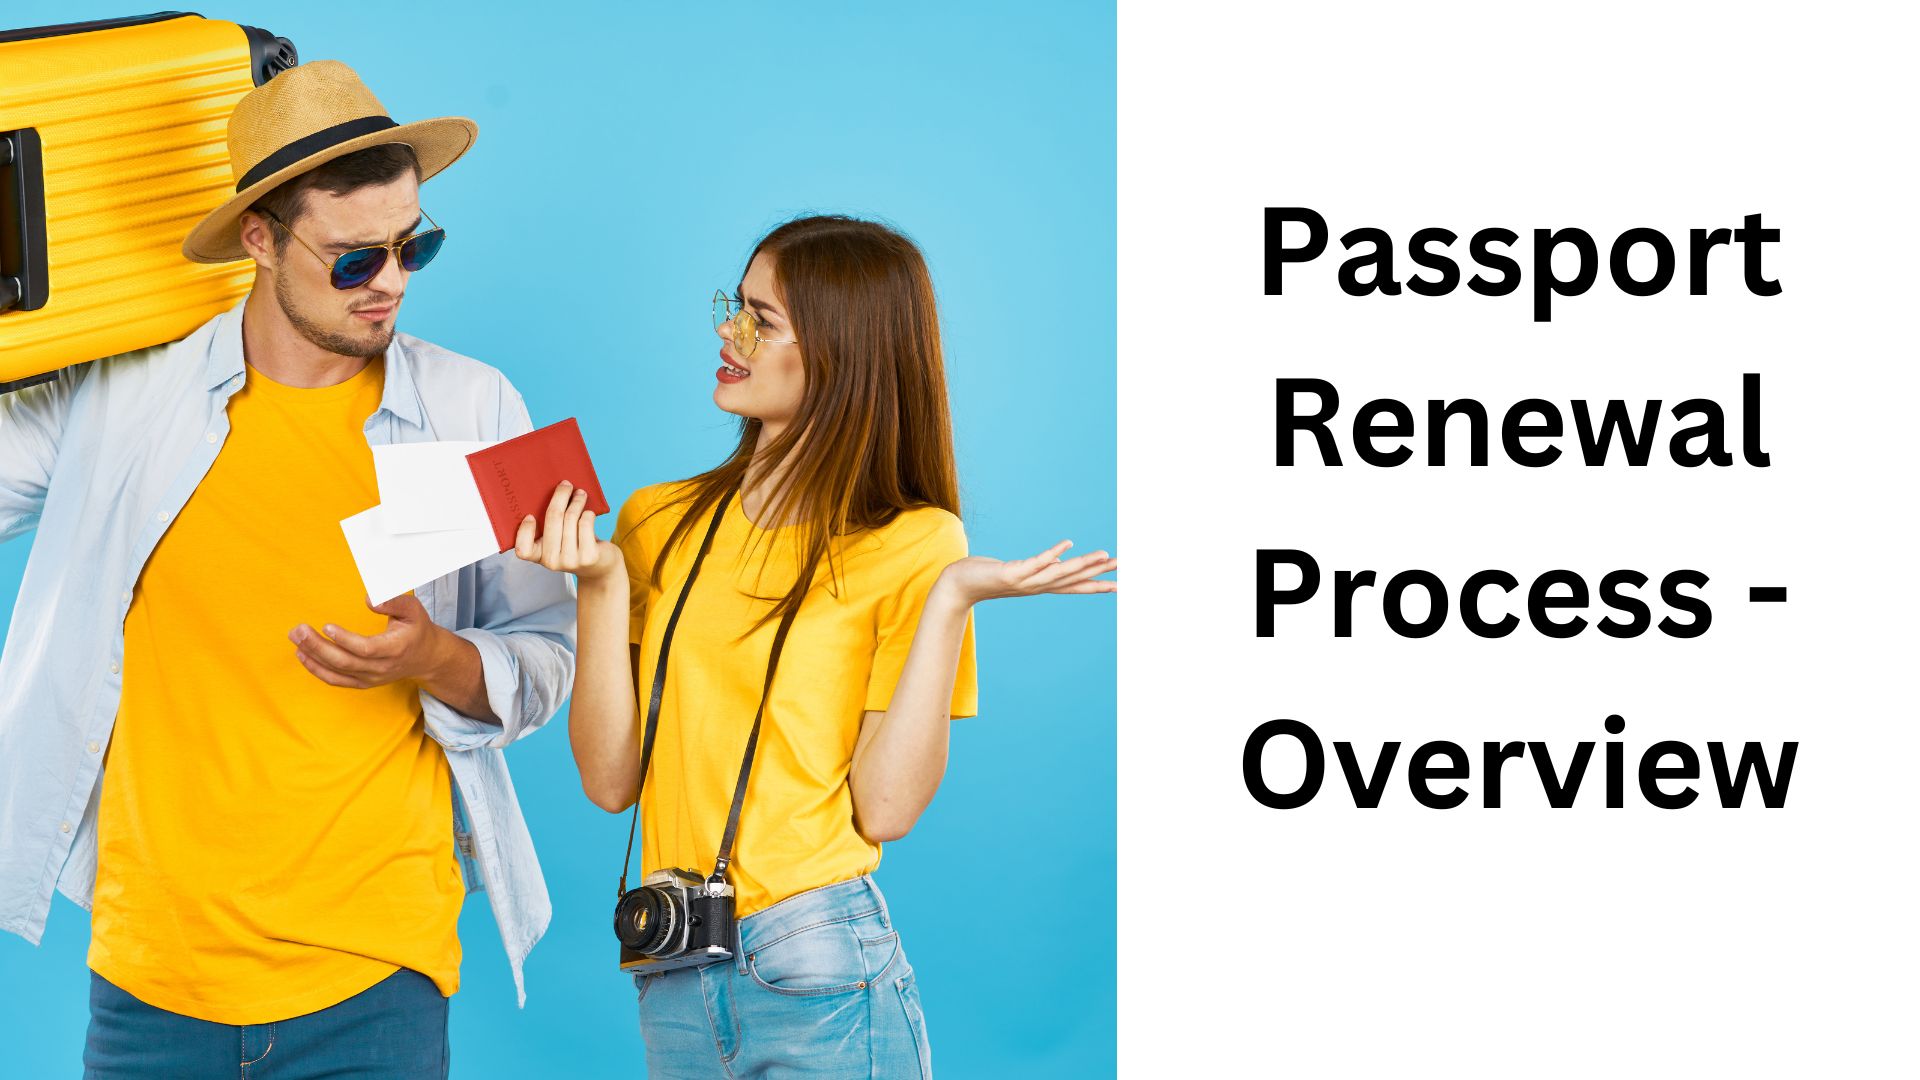 Passport Renewal Process - Overview